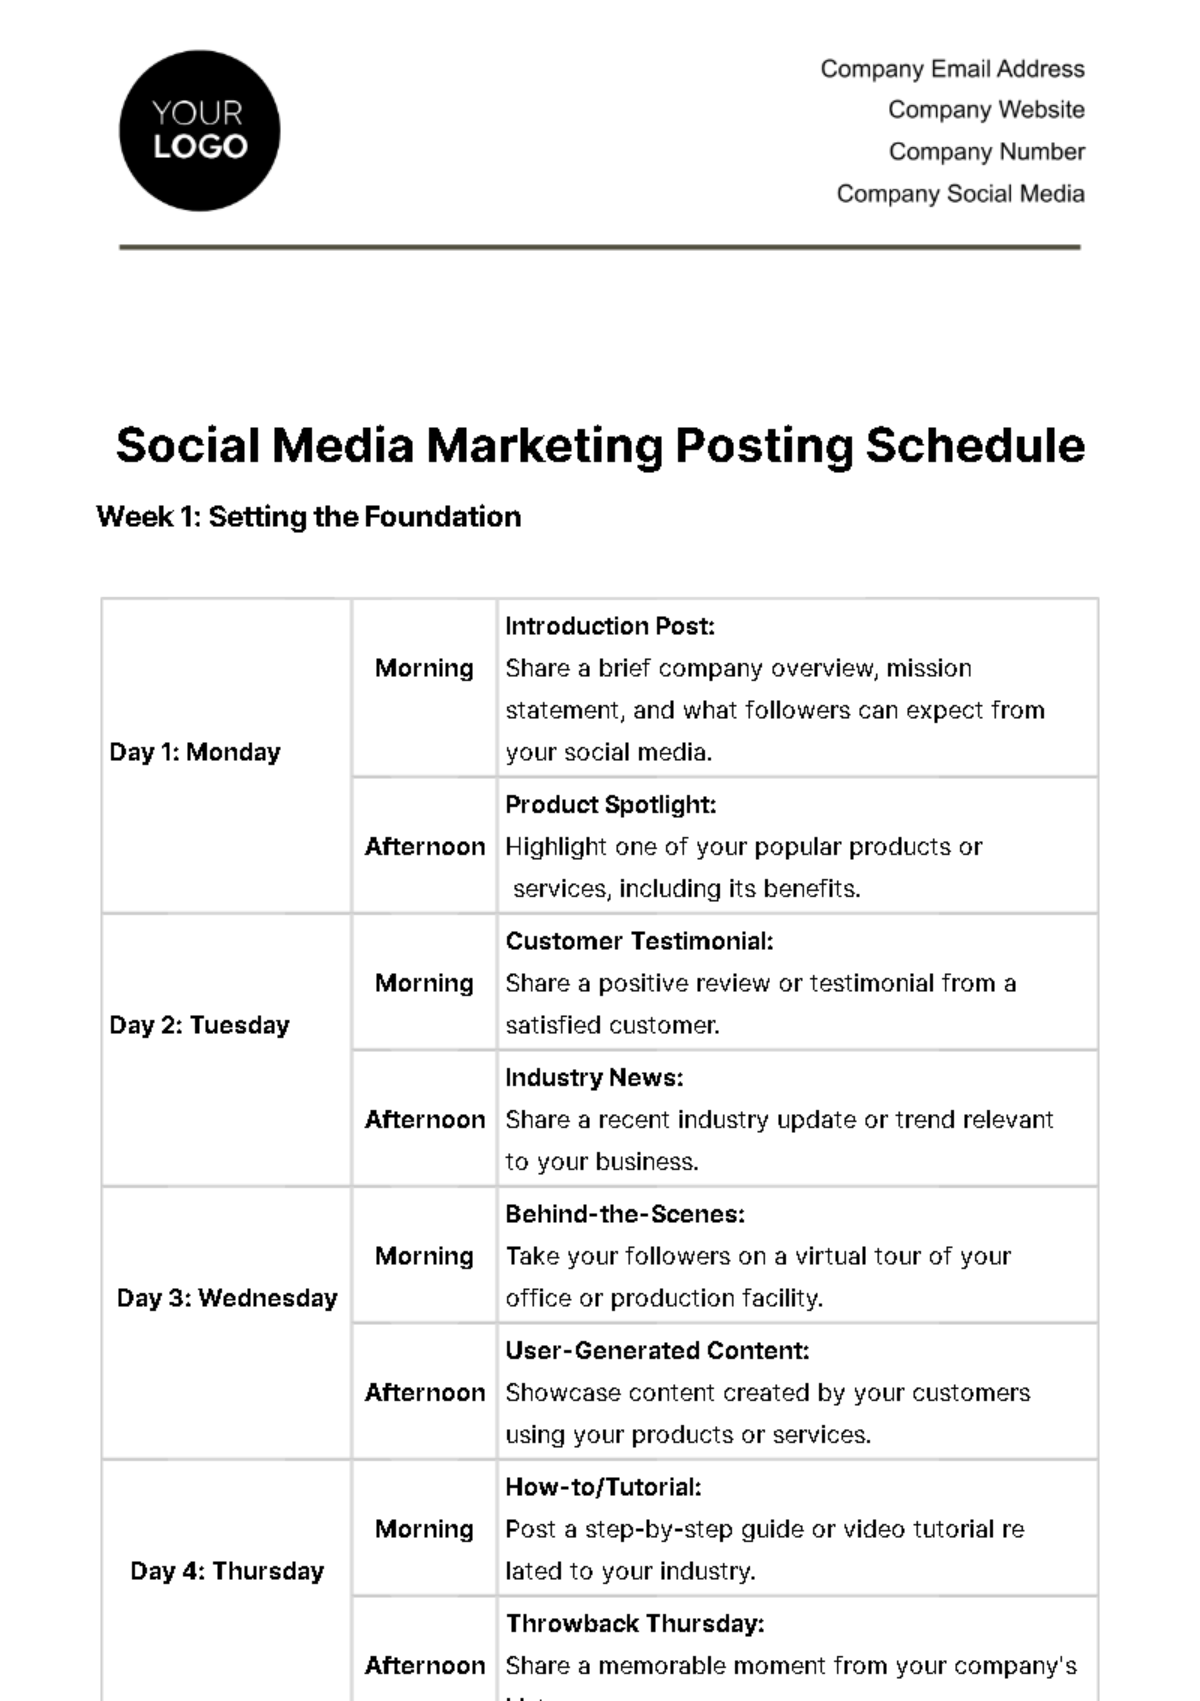 Free Social Media Marketing Posting Schedule Template